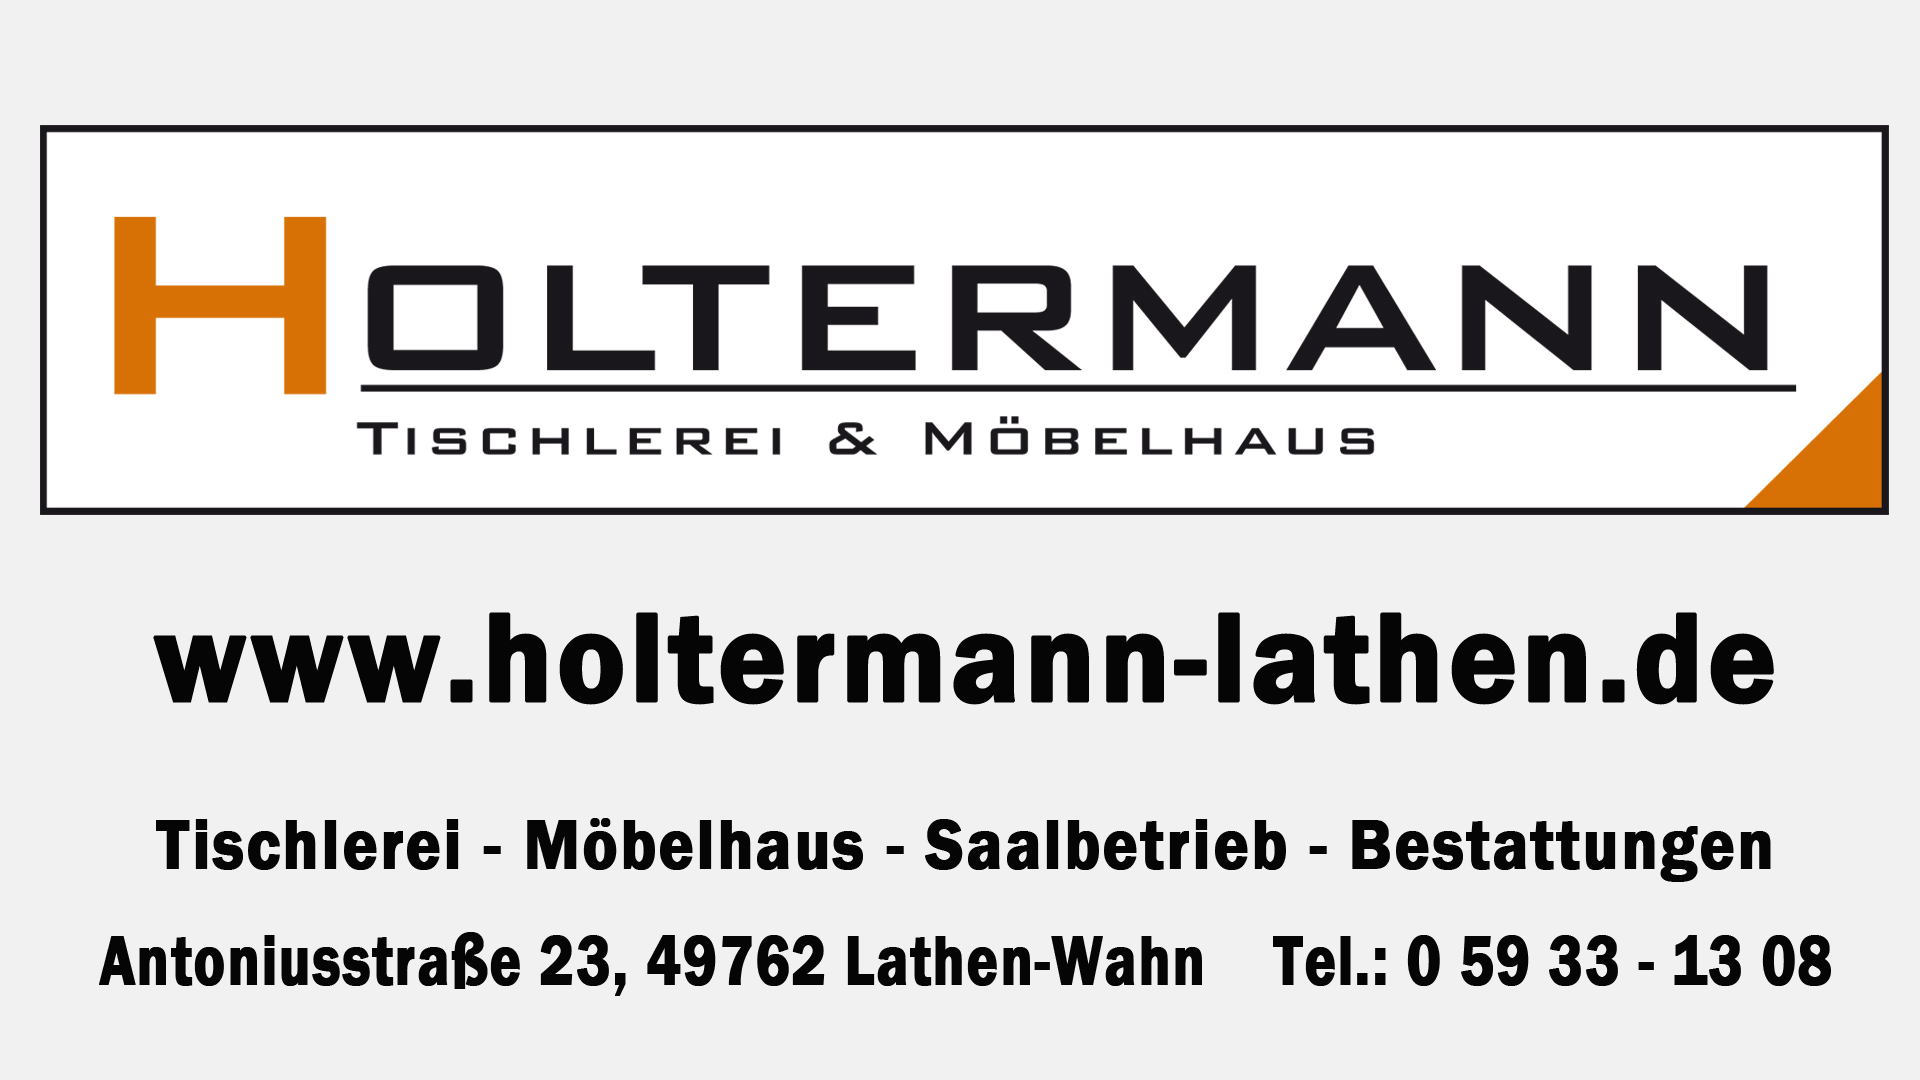 LED Holtermann